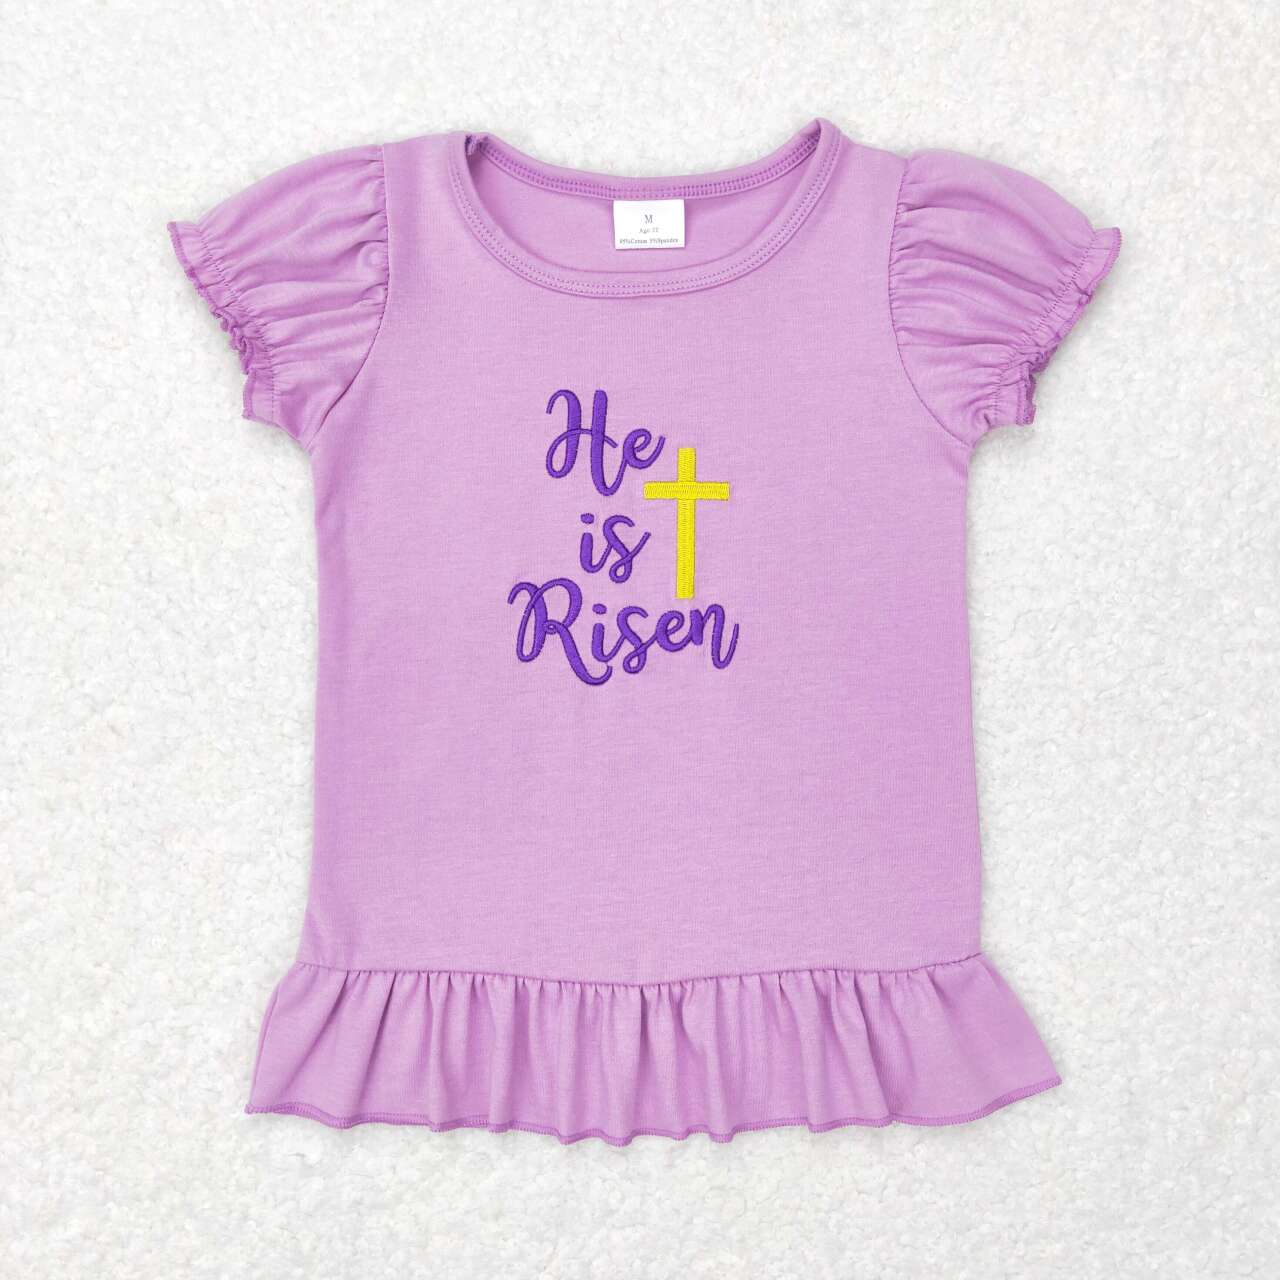 GT0393 He is Risen Cross Embroidery Print Purple Girls Easter Tee Shirt Top